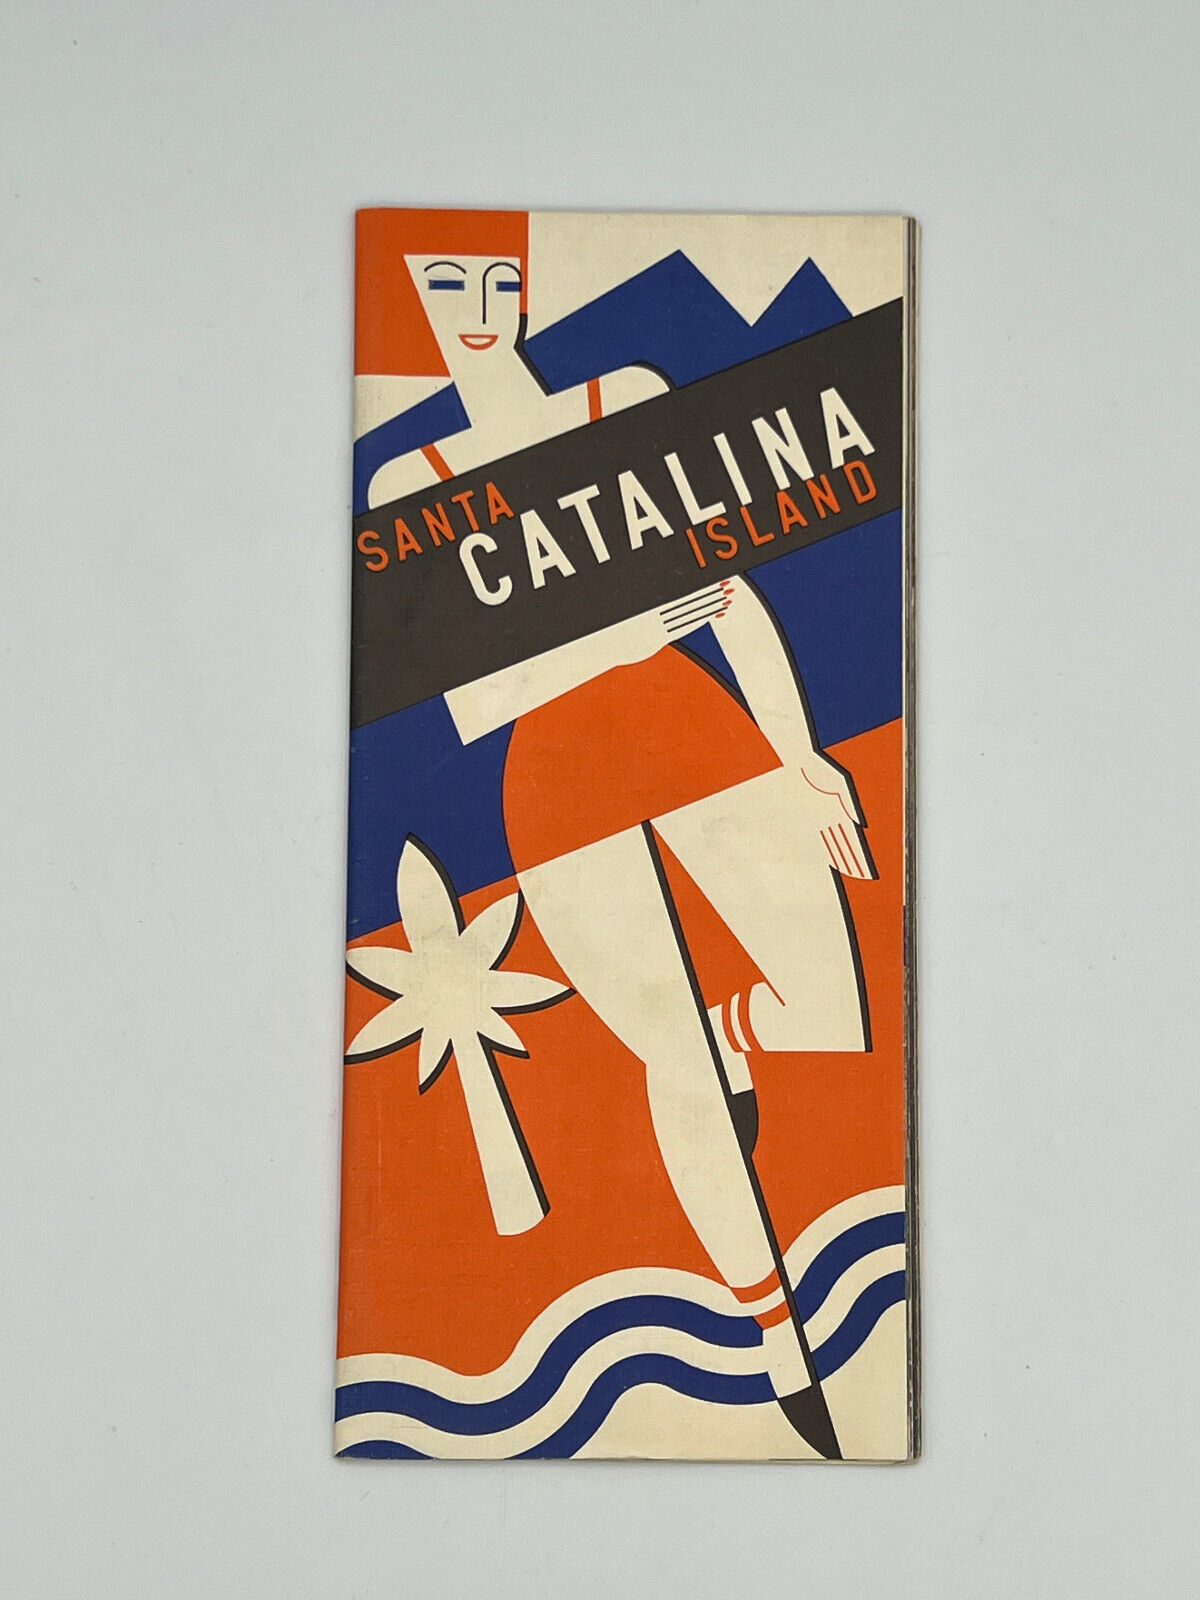 Vintage 1930s Art Deco Santa Catalina Island Tourist Guide Map Booklet